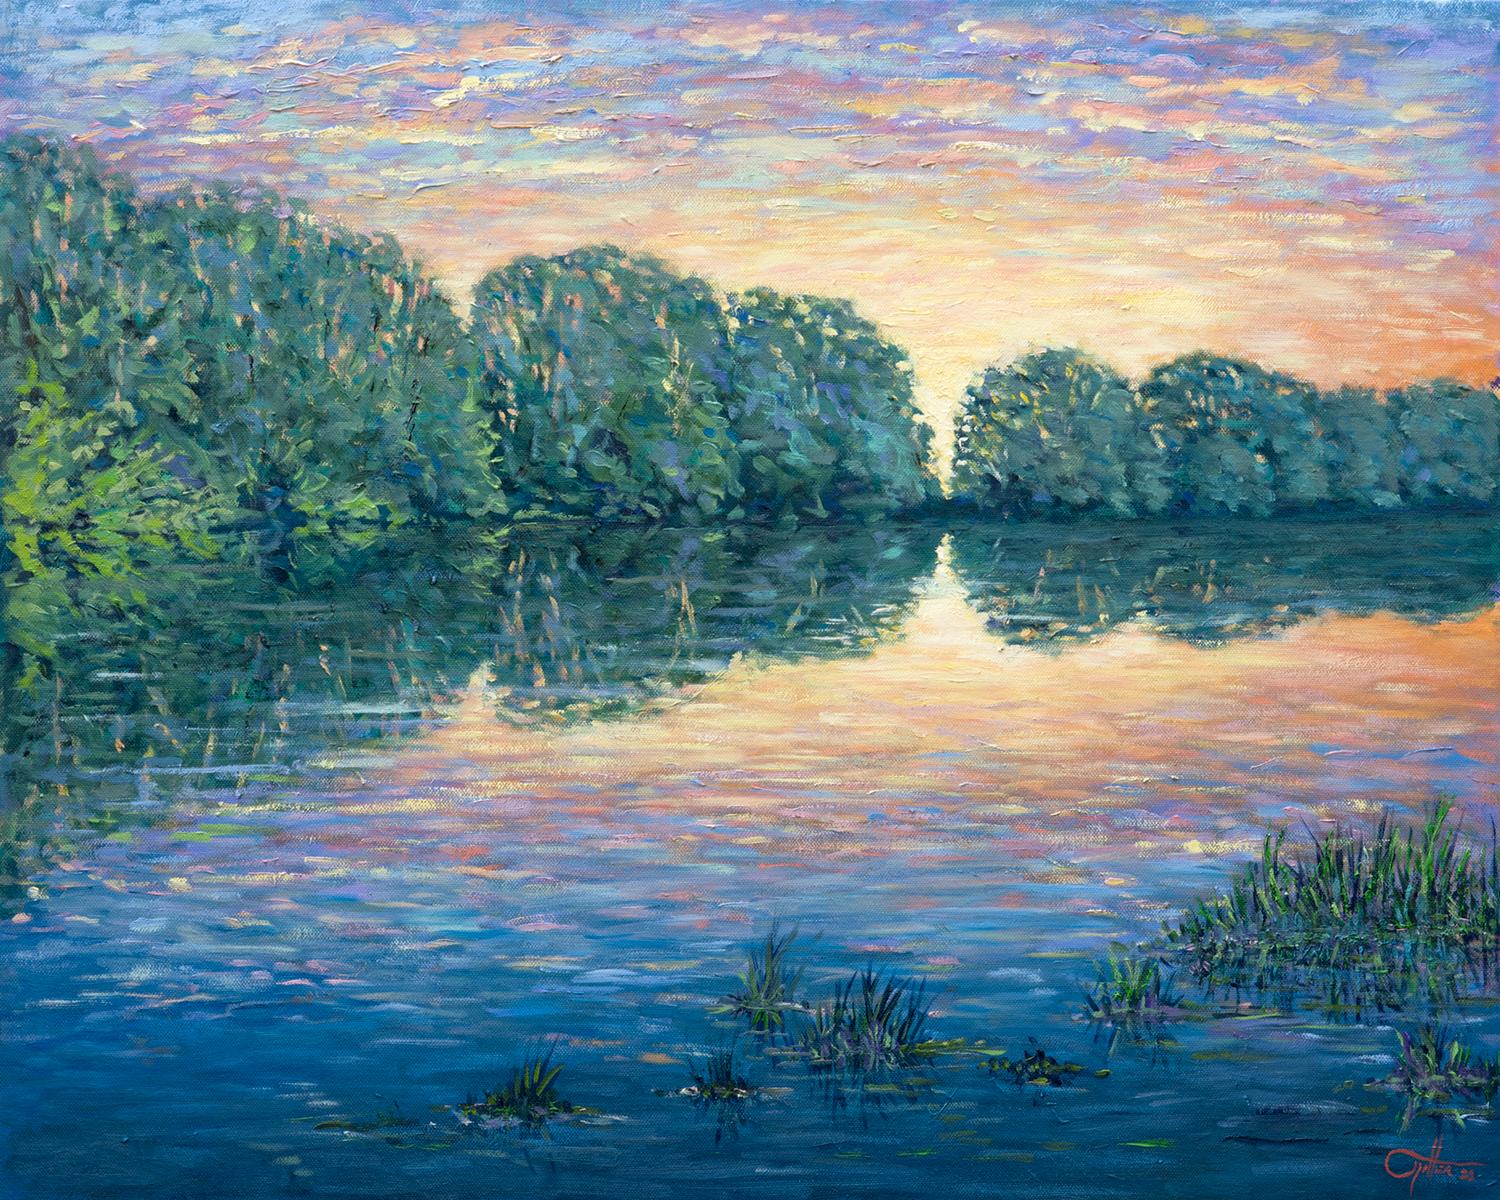 Lee Tiller Landscape Painting - Sunburst Finish, Colourful Impressionist Landscape Art, Original Oil Painting